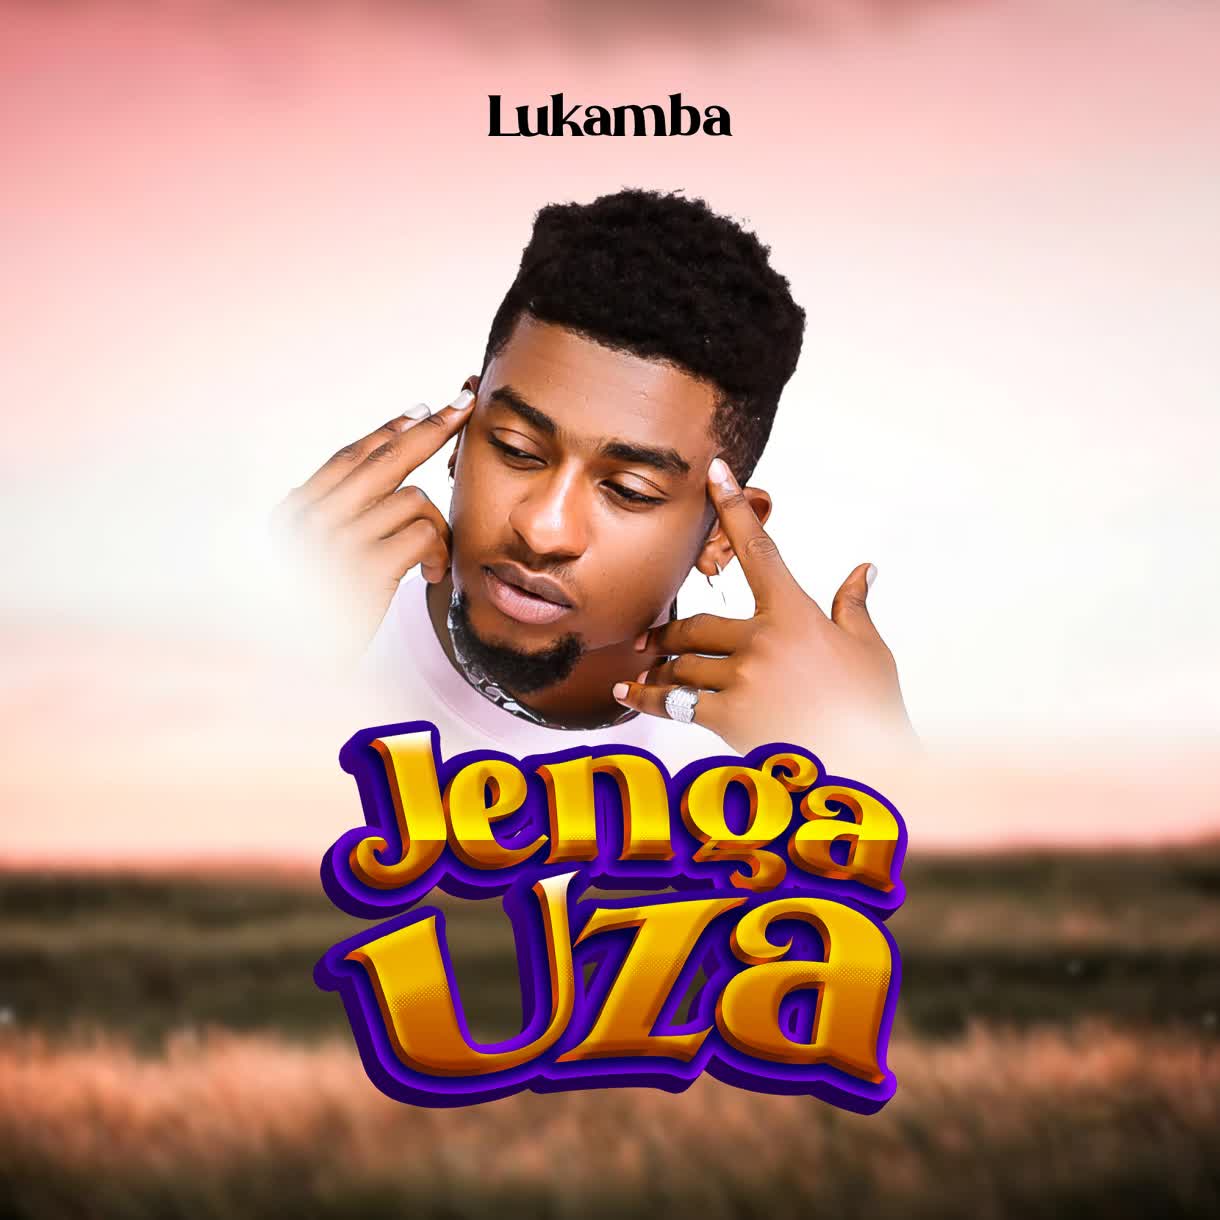 Download Audio | Lukamba – Jenga Uza